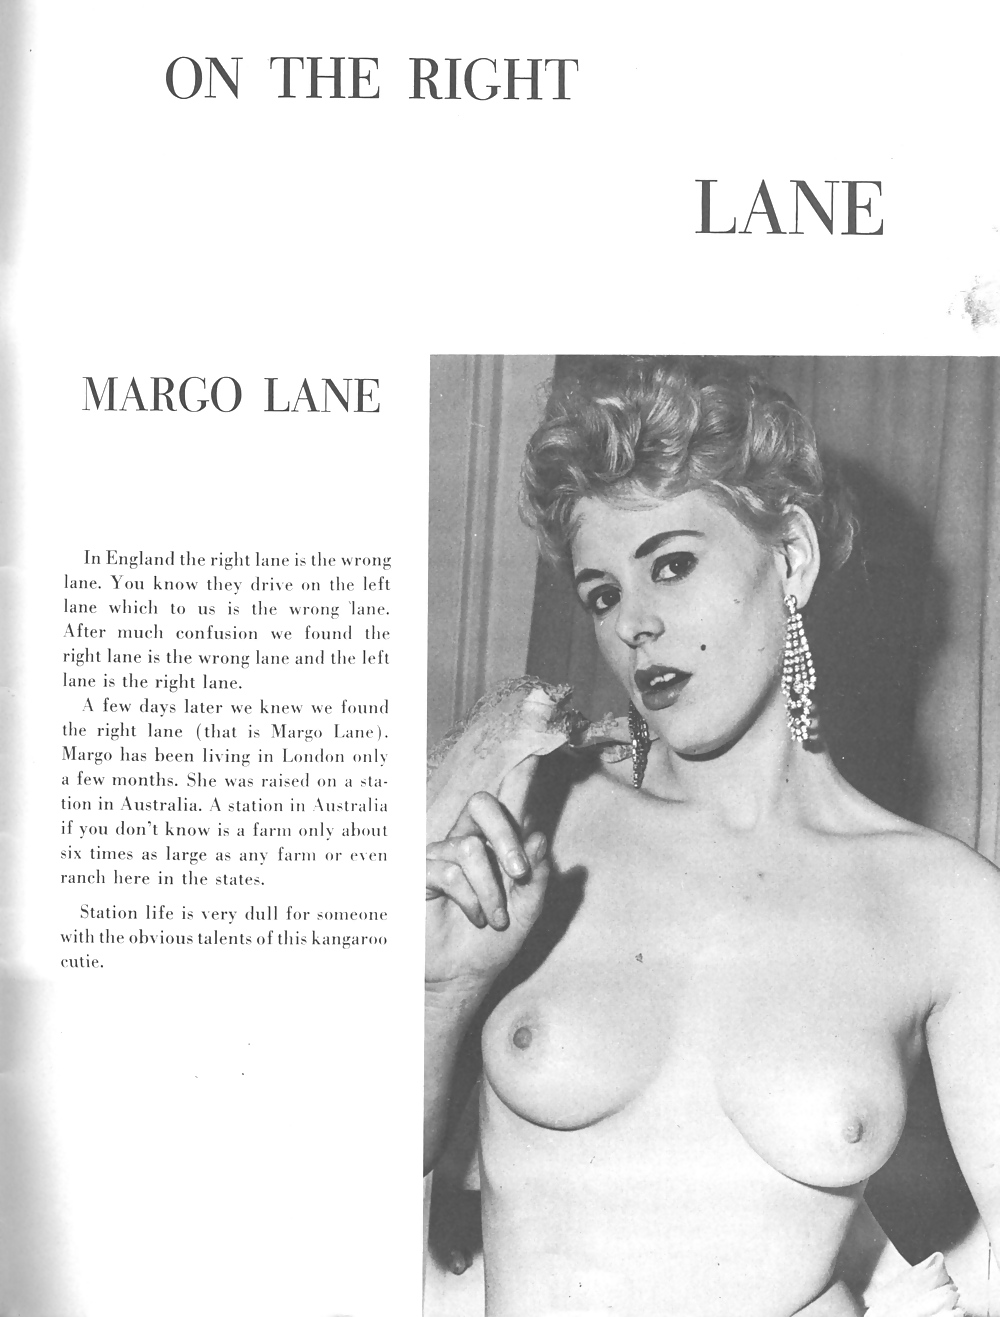 Vintage Zeitschriften Magnifique Vol 01 No 01 - Anfang Der 1960er Jahre #1505359